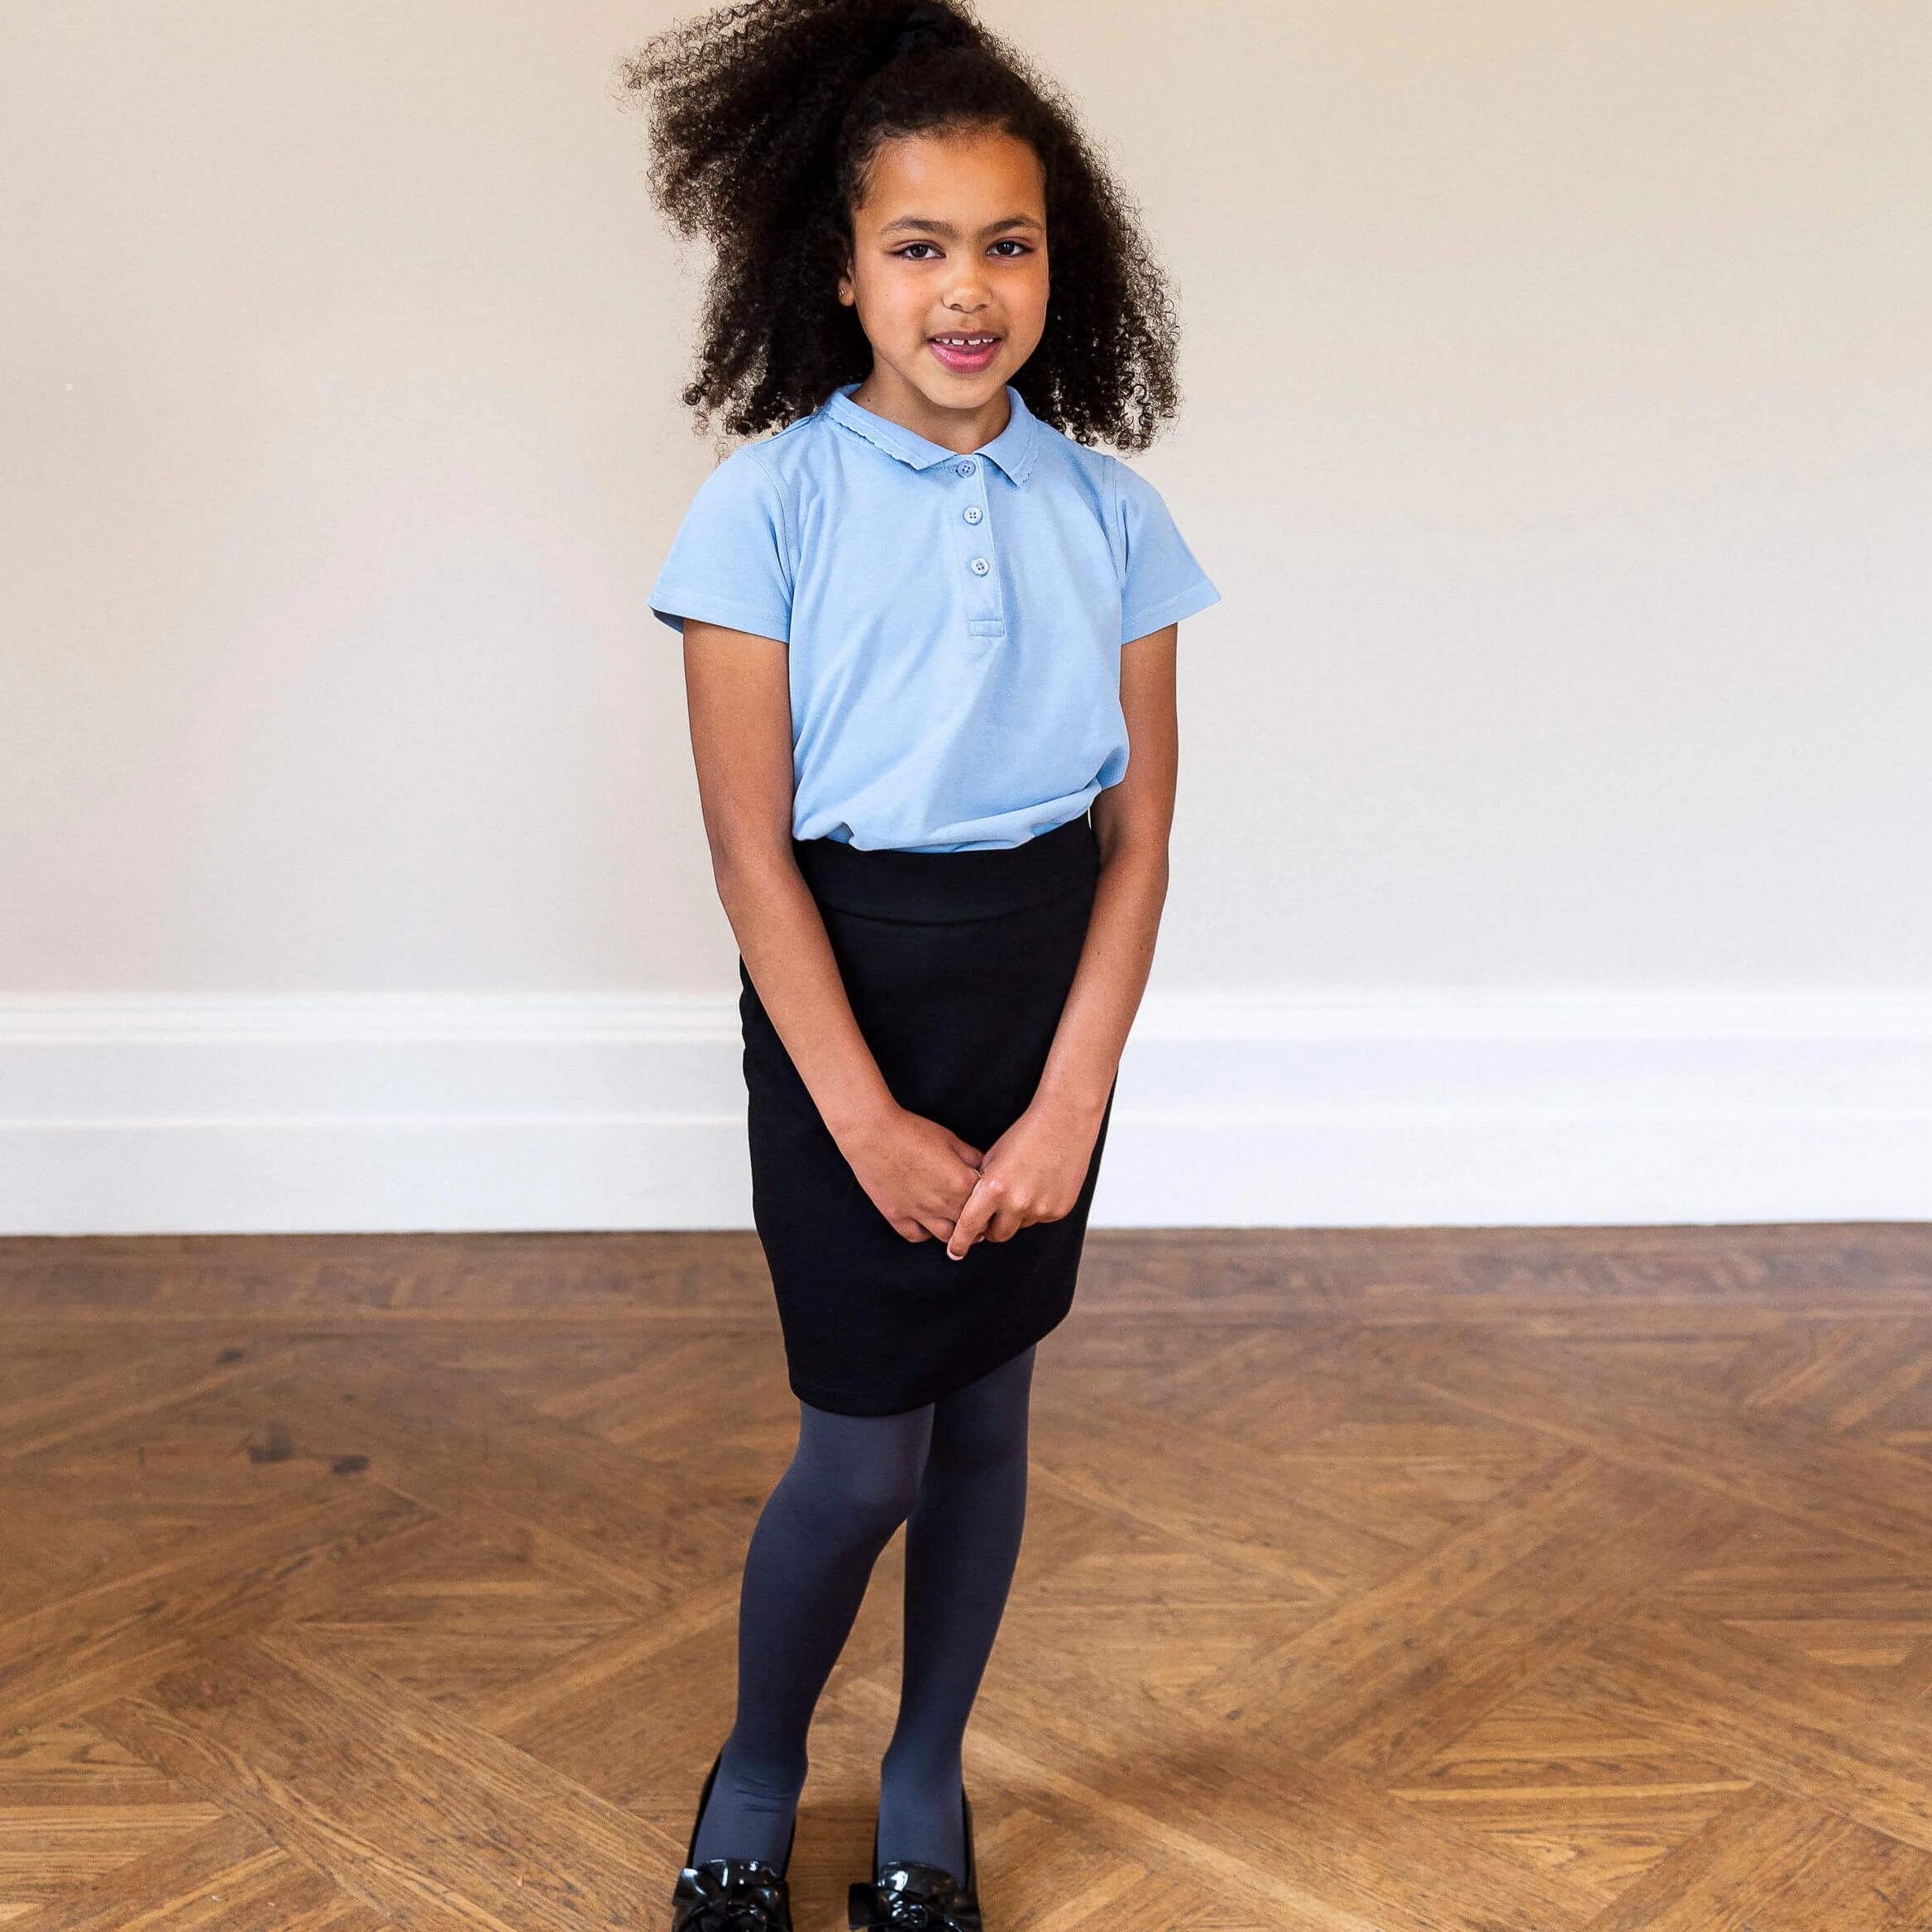 Jefferies Socks School Uniform Cotton Tights 2 Pair Pack